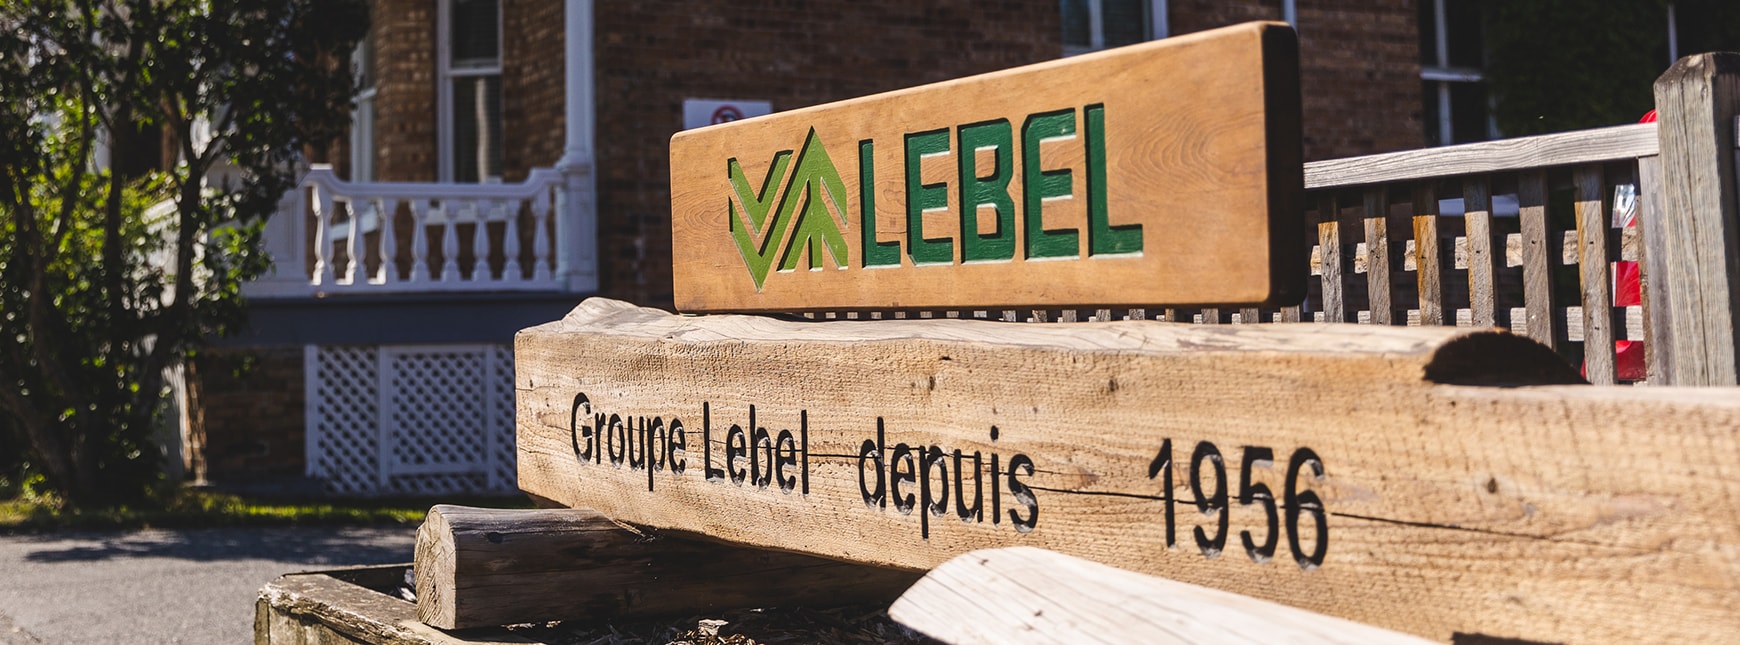  Our enterprise - Groupe Lebel inc.